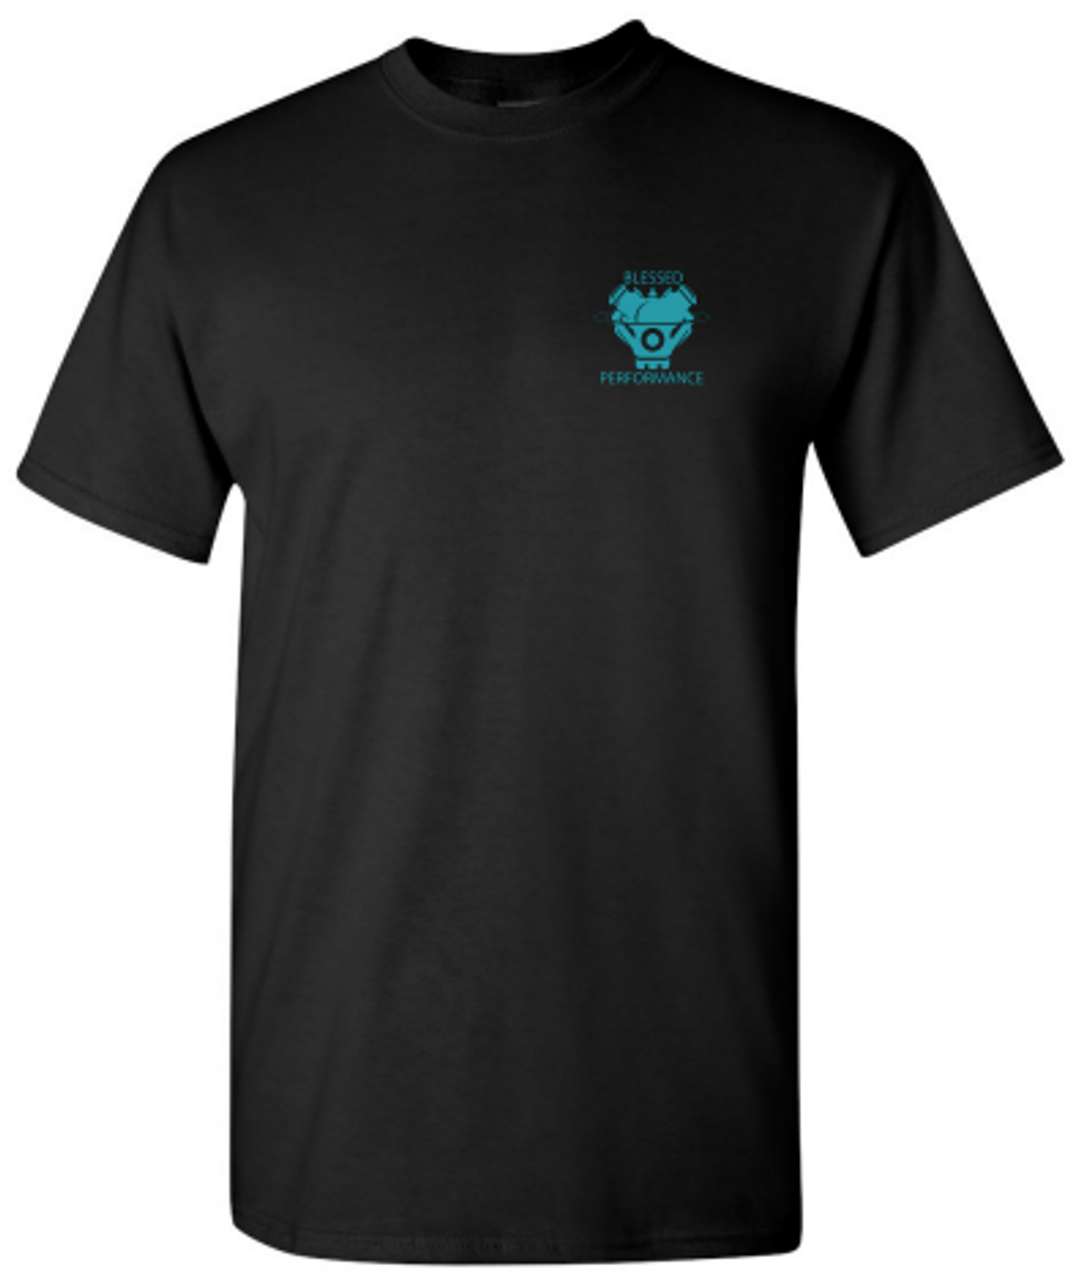  "BLACK SMOKE MATTERS" Teal on Black Flag Design T-Shirt (BSM_T&B_SHIRT) Front View